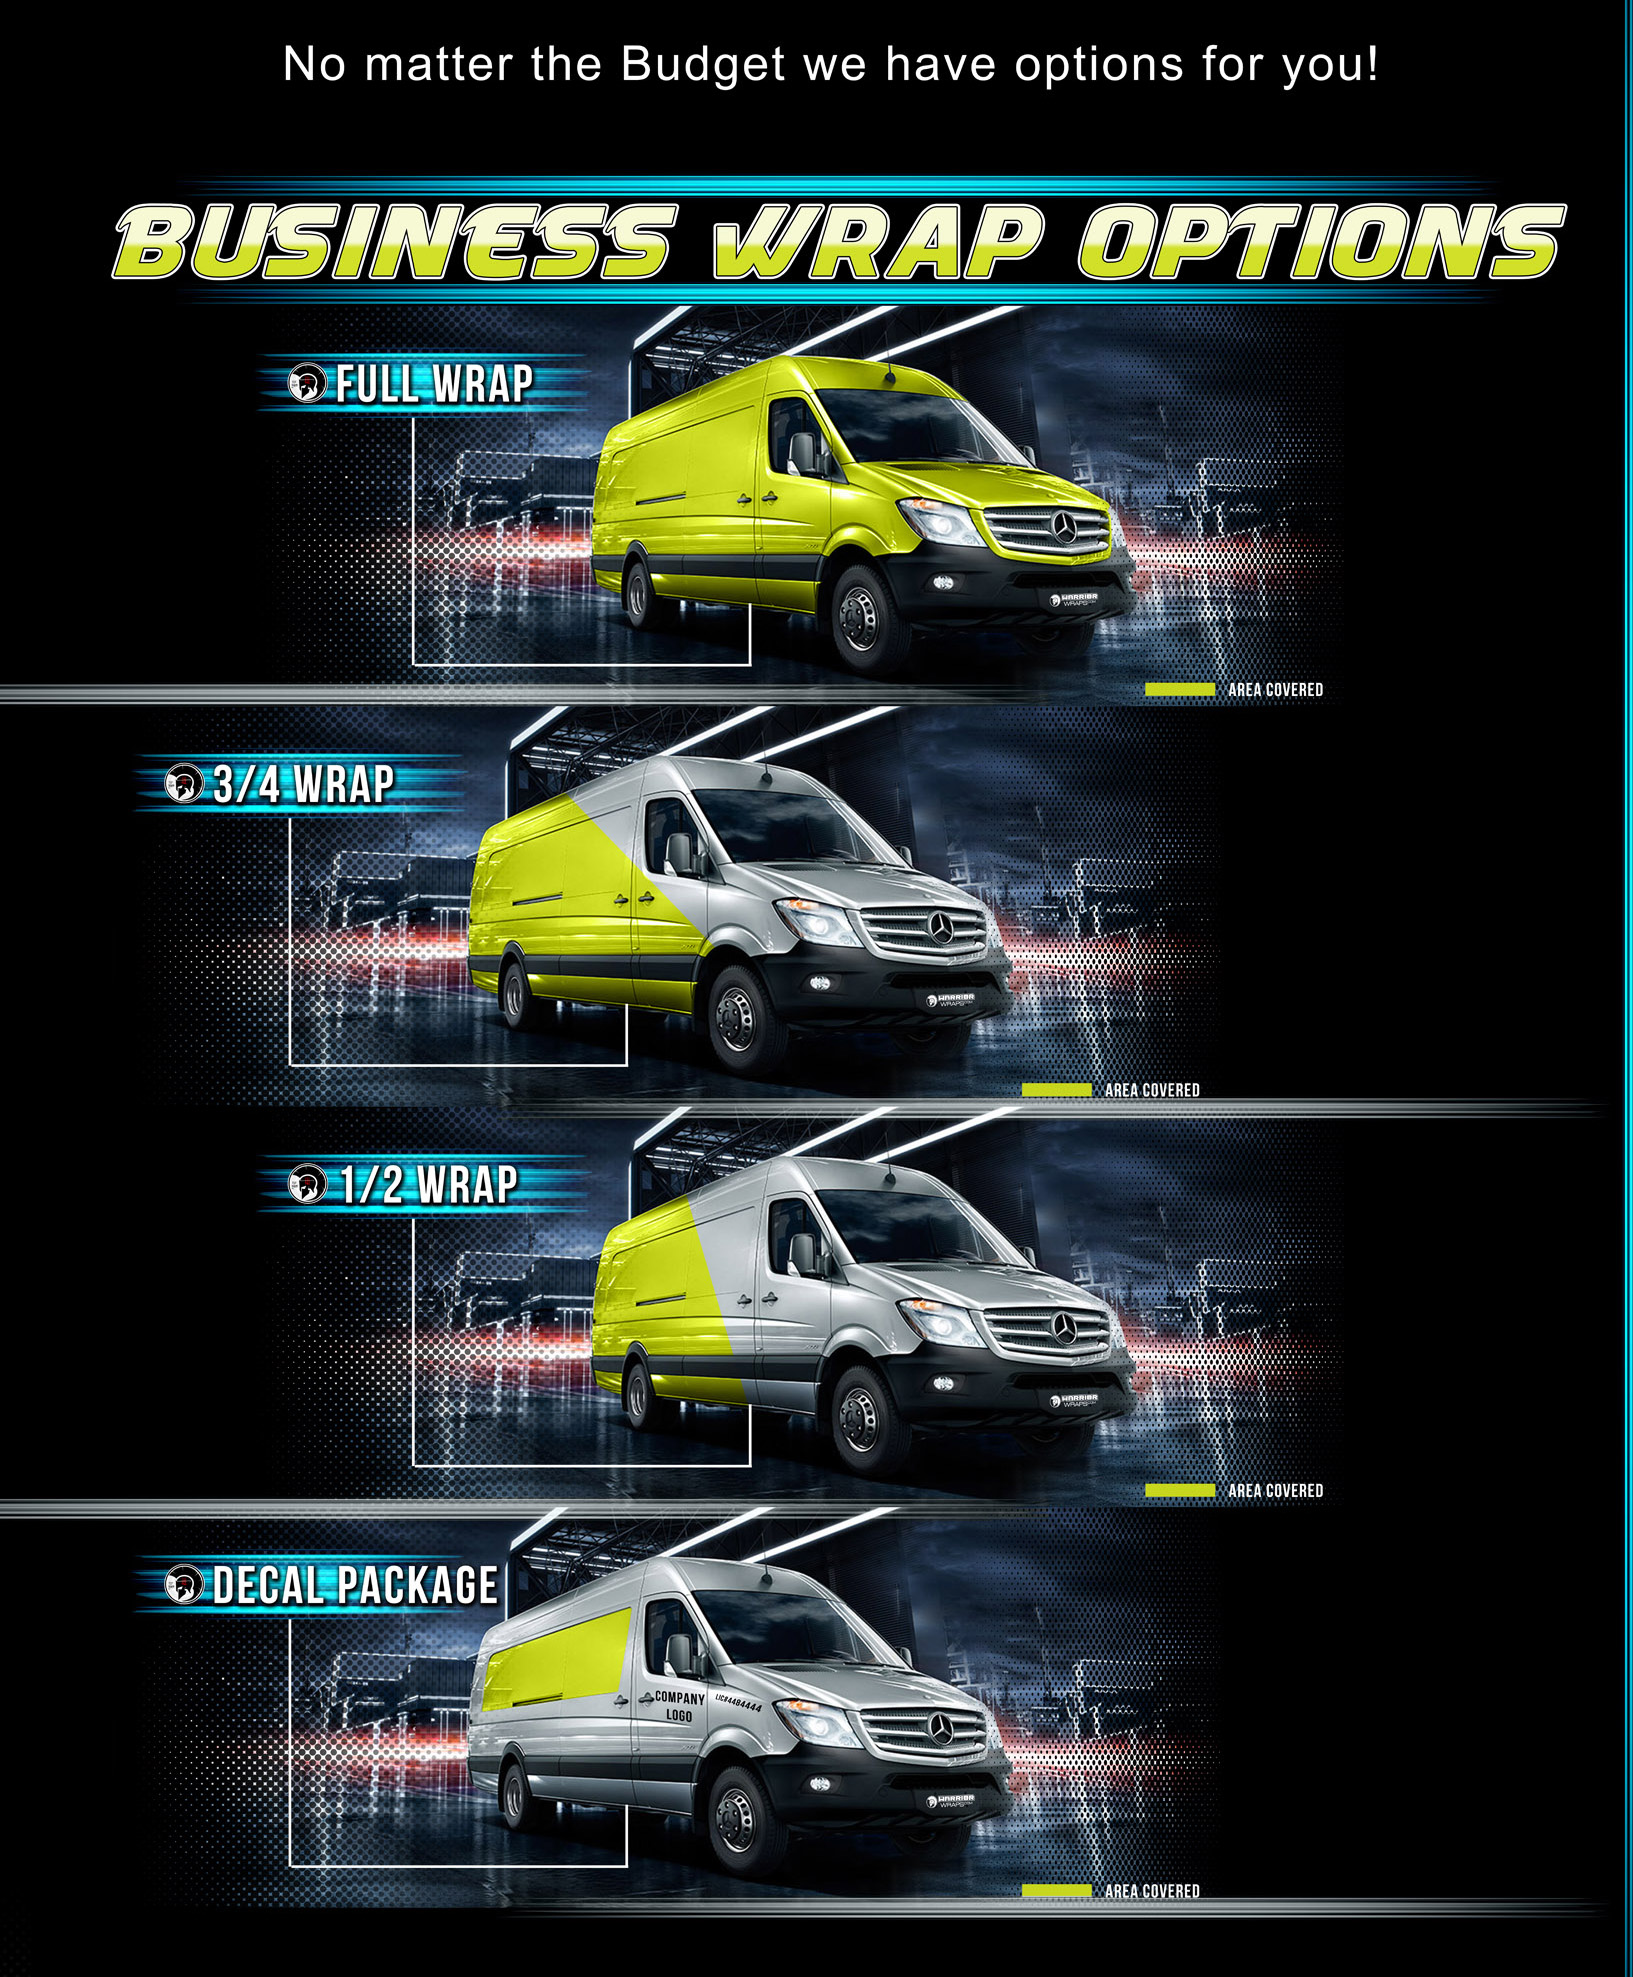 Fleets business options